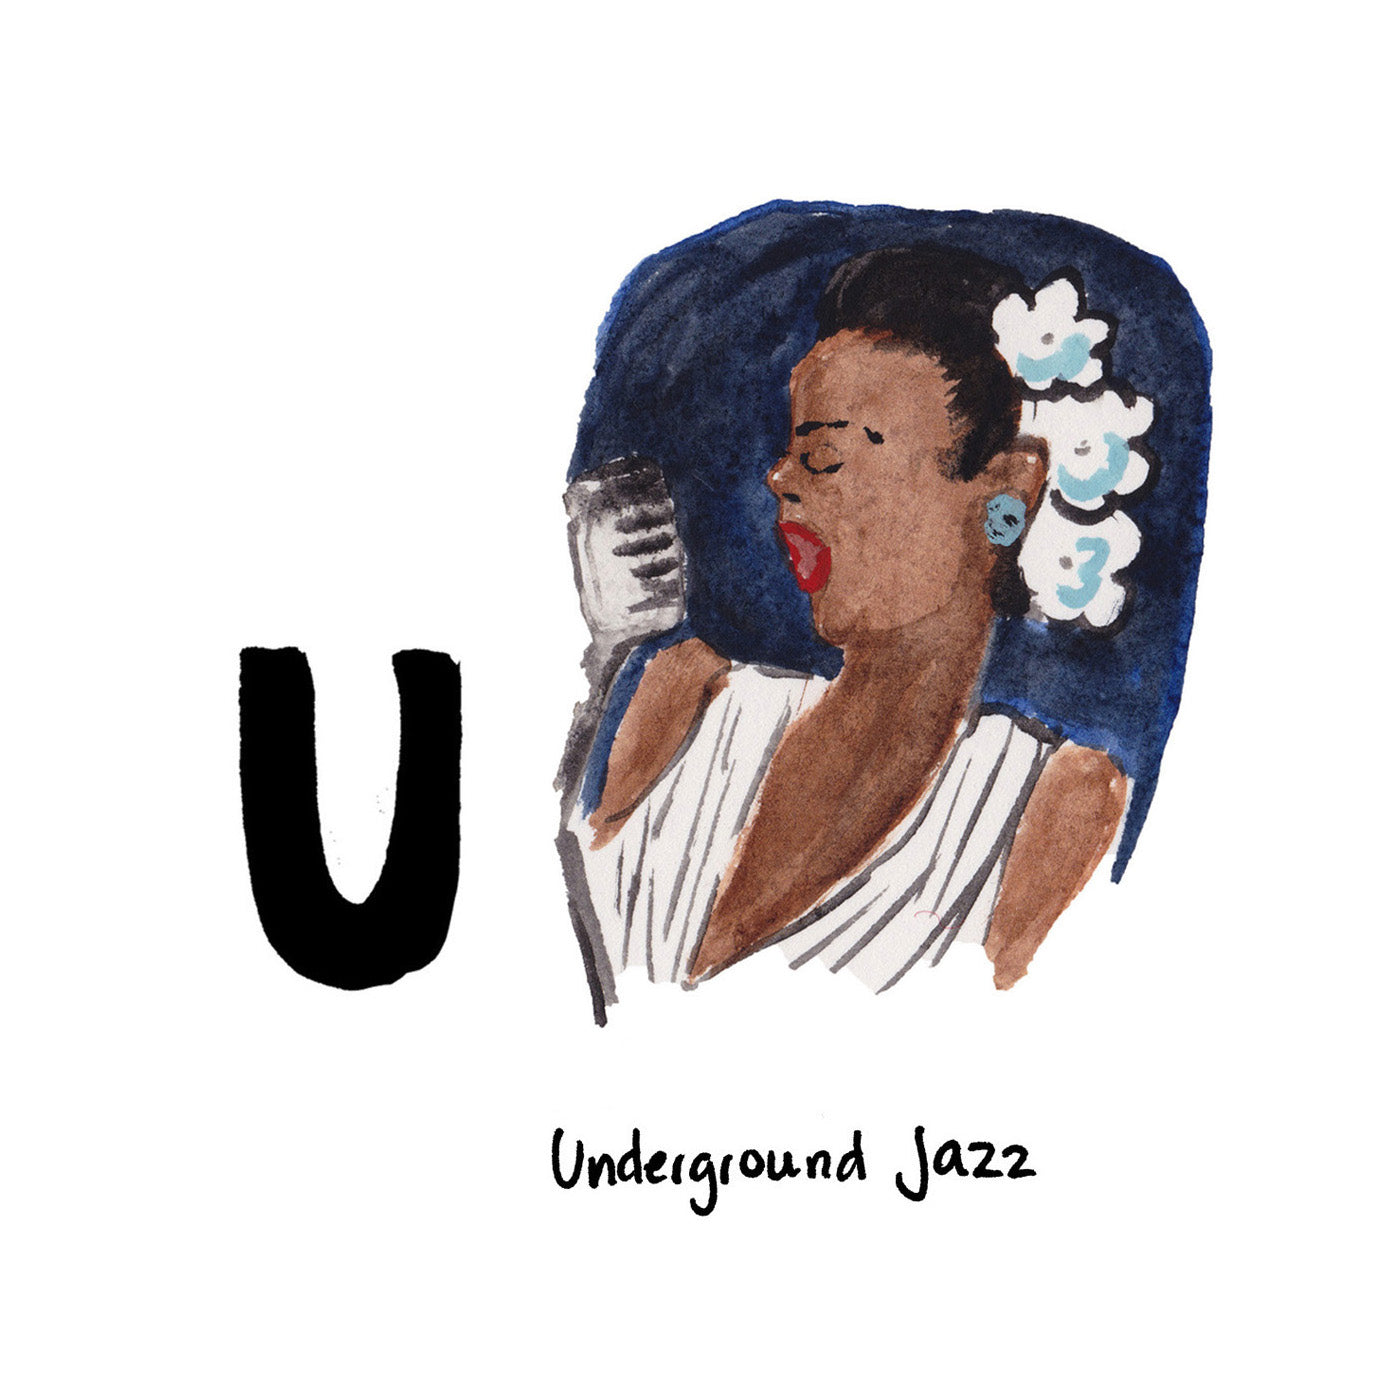 U is for Underground Jazz. The 1920s prohibition era marked a thriving underground speakeasy and jazz scene in Harlem. Iconic jazz singer, Billie Holiday, found fame at Jerry’s on 133rd Swing Street.